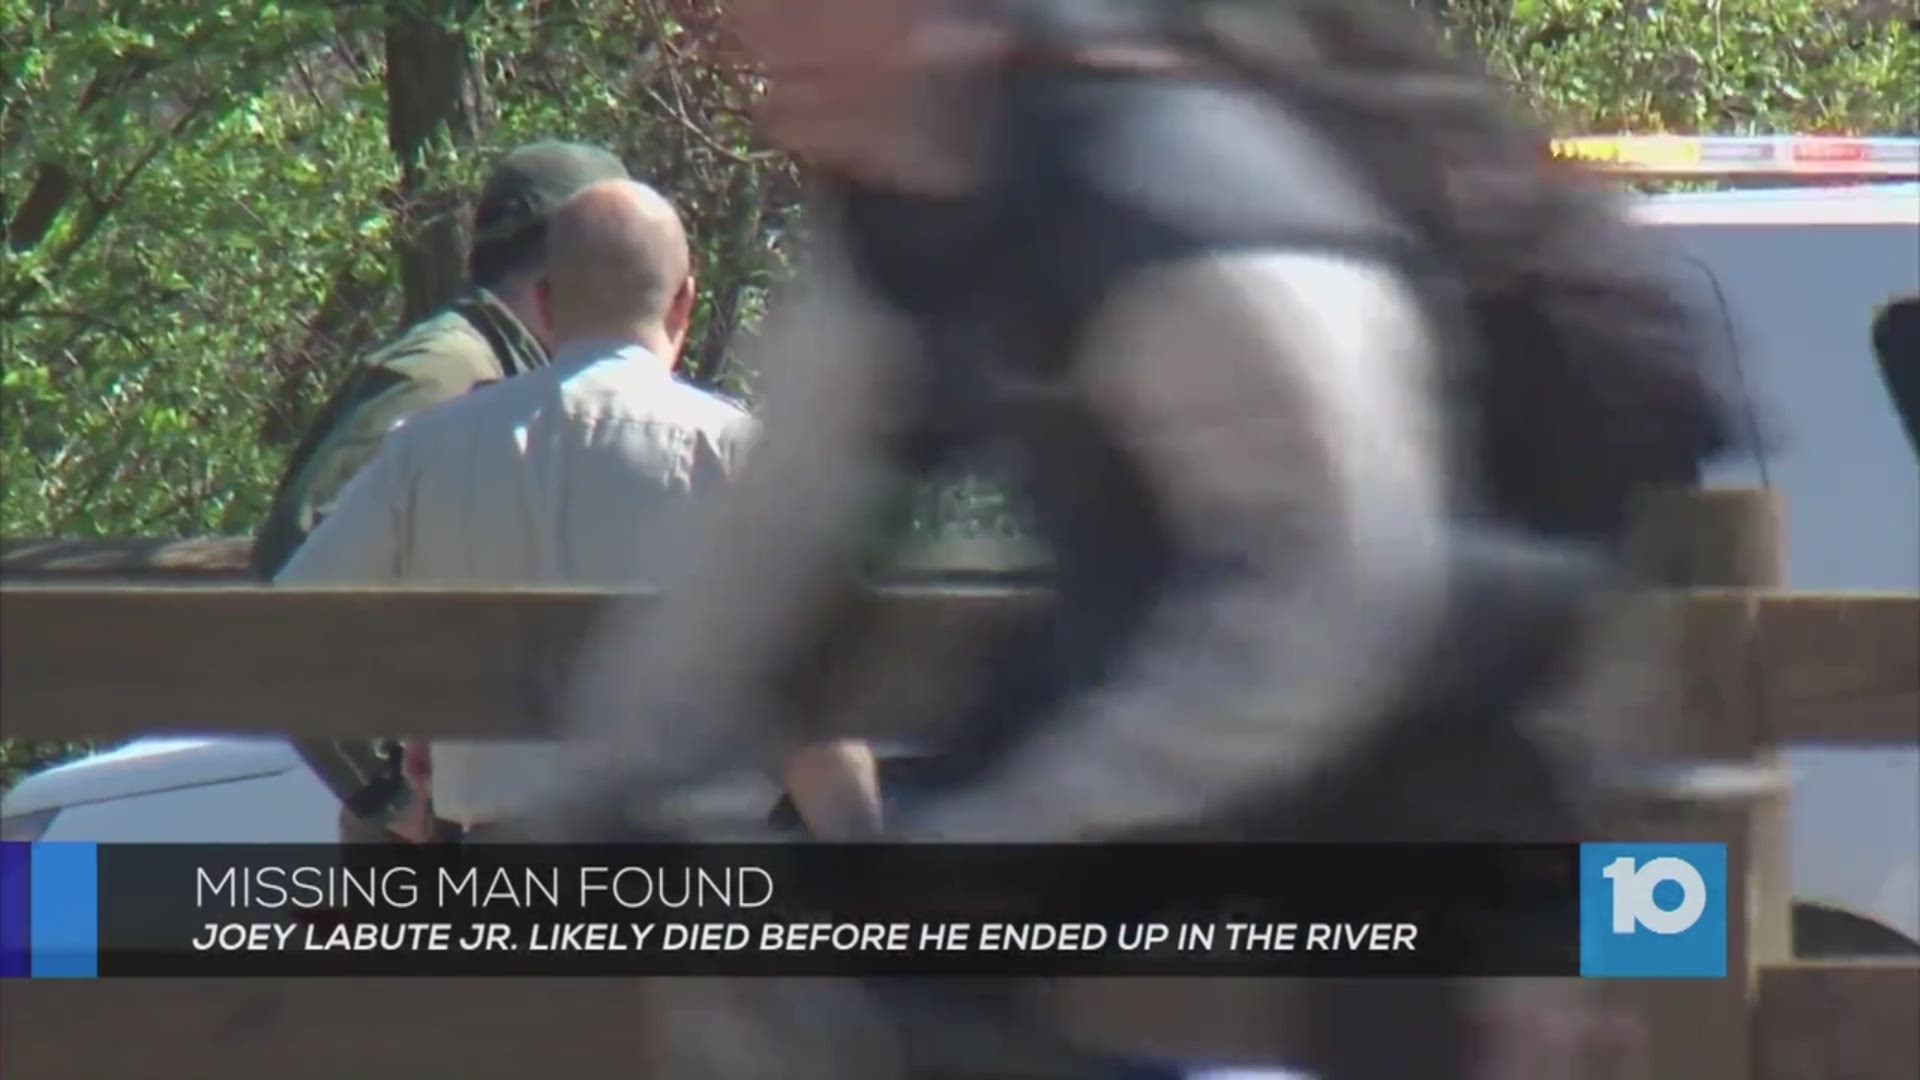 Coroner: Body found in Scioto River identified as Joey LaBute